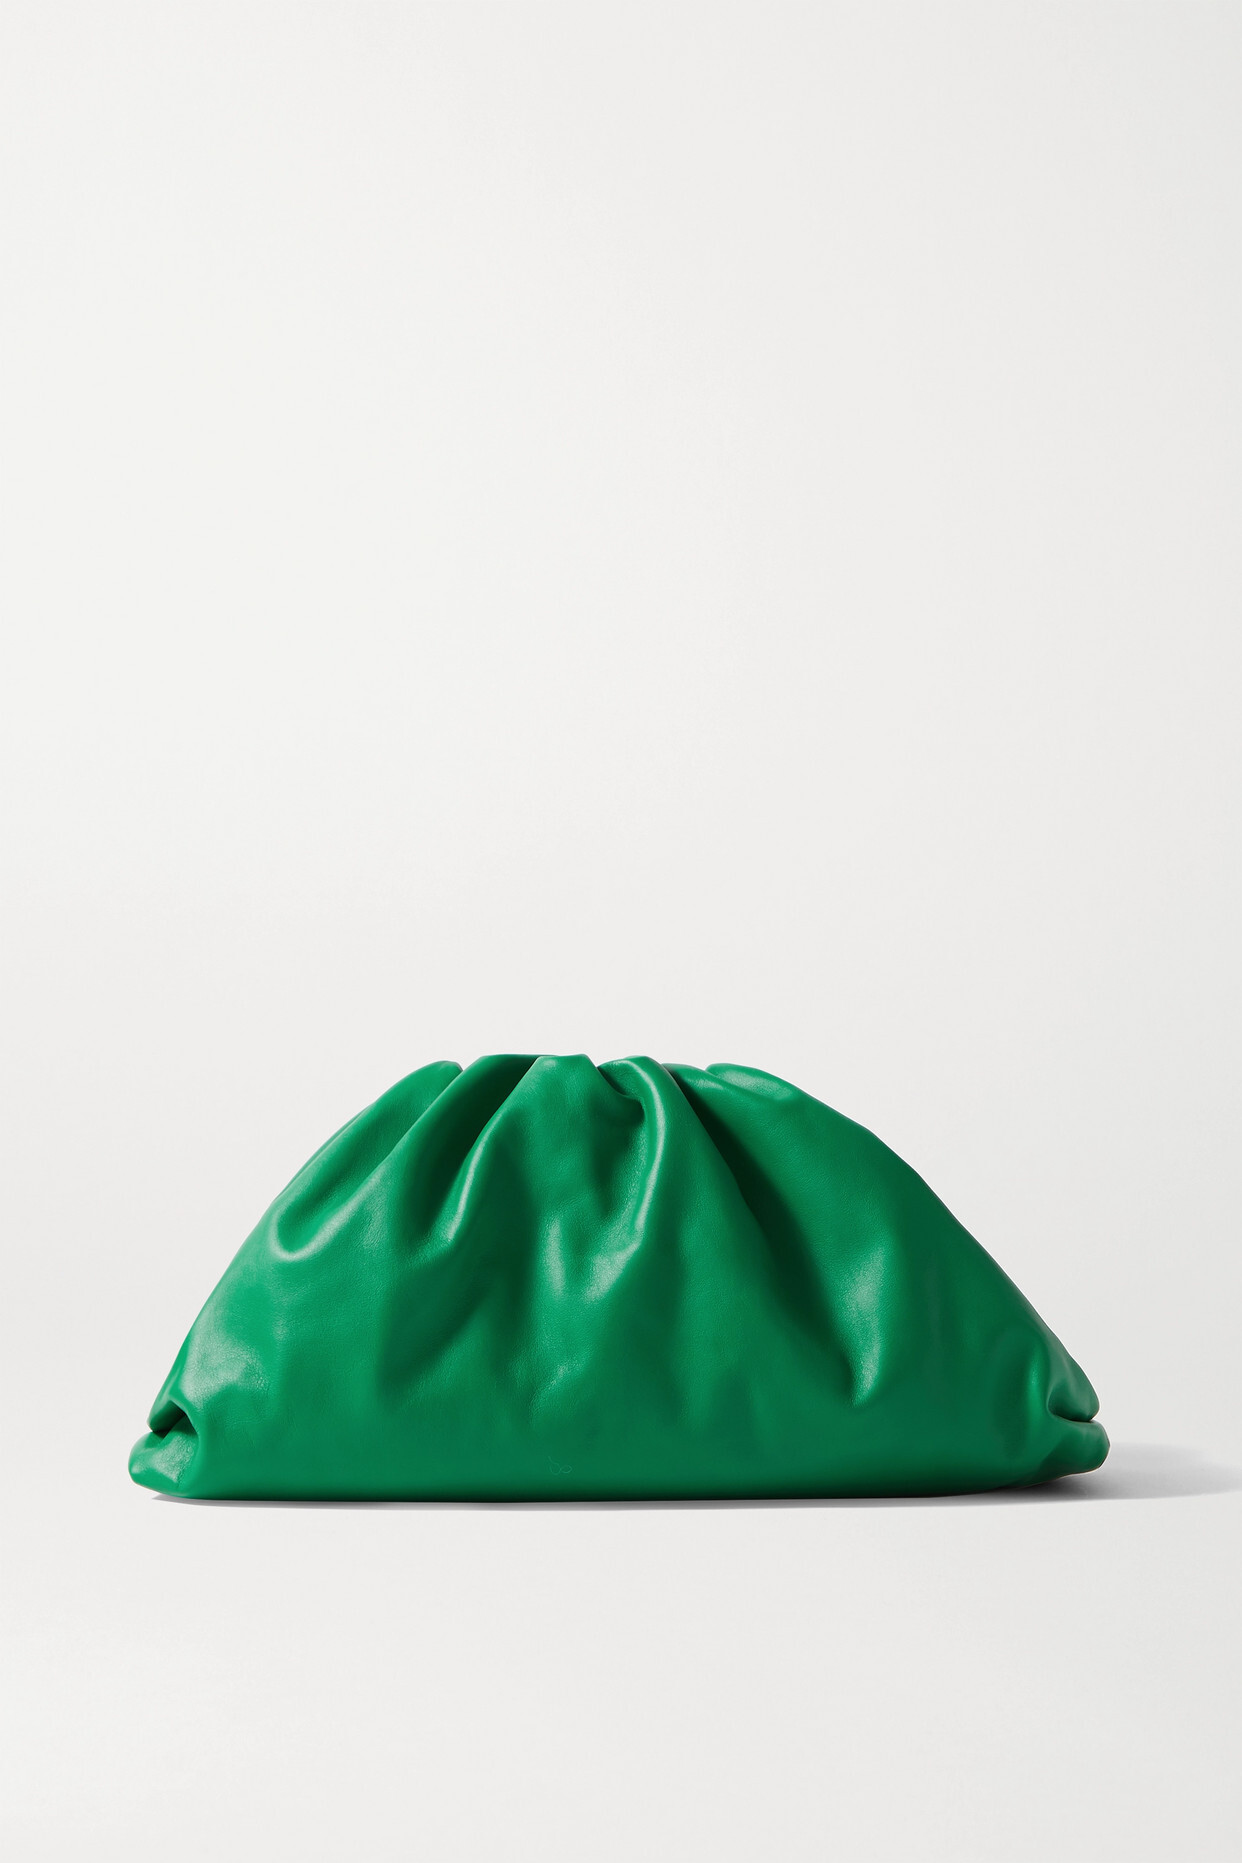 Bottega Veneta - The Pouch Large Gathered Leather Clutch - Green